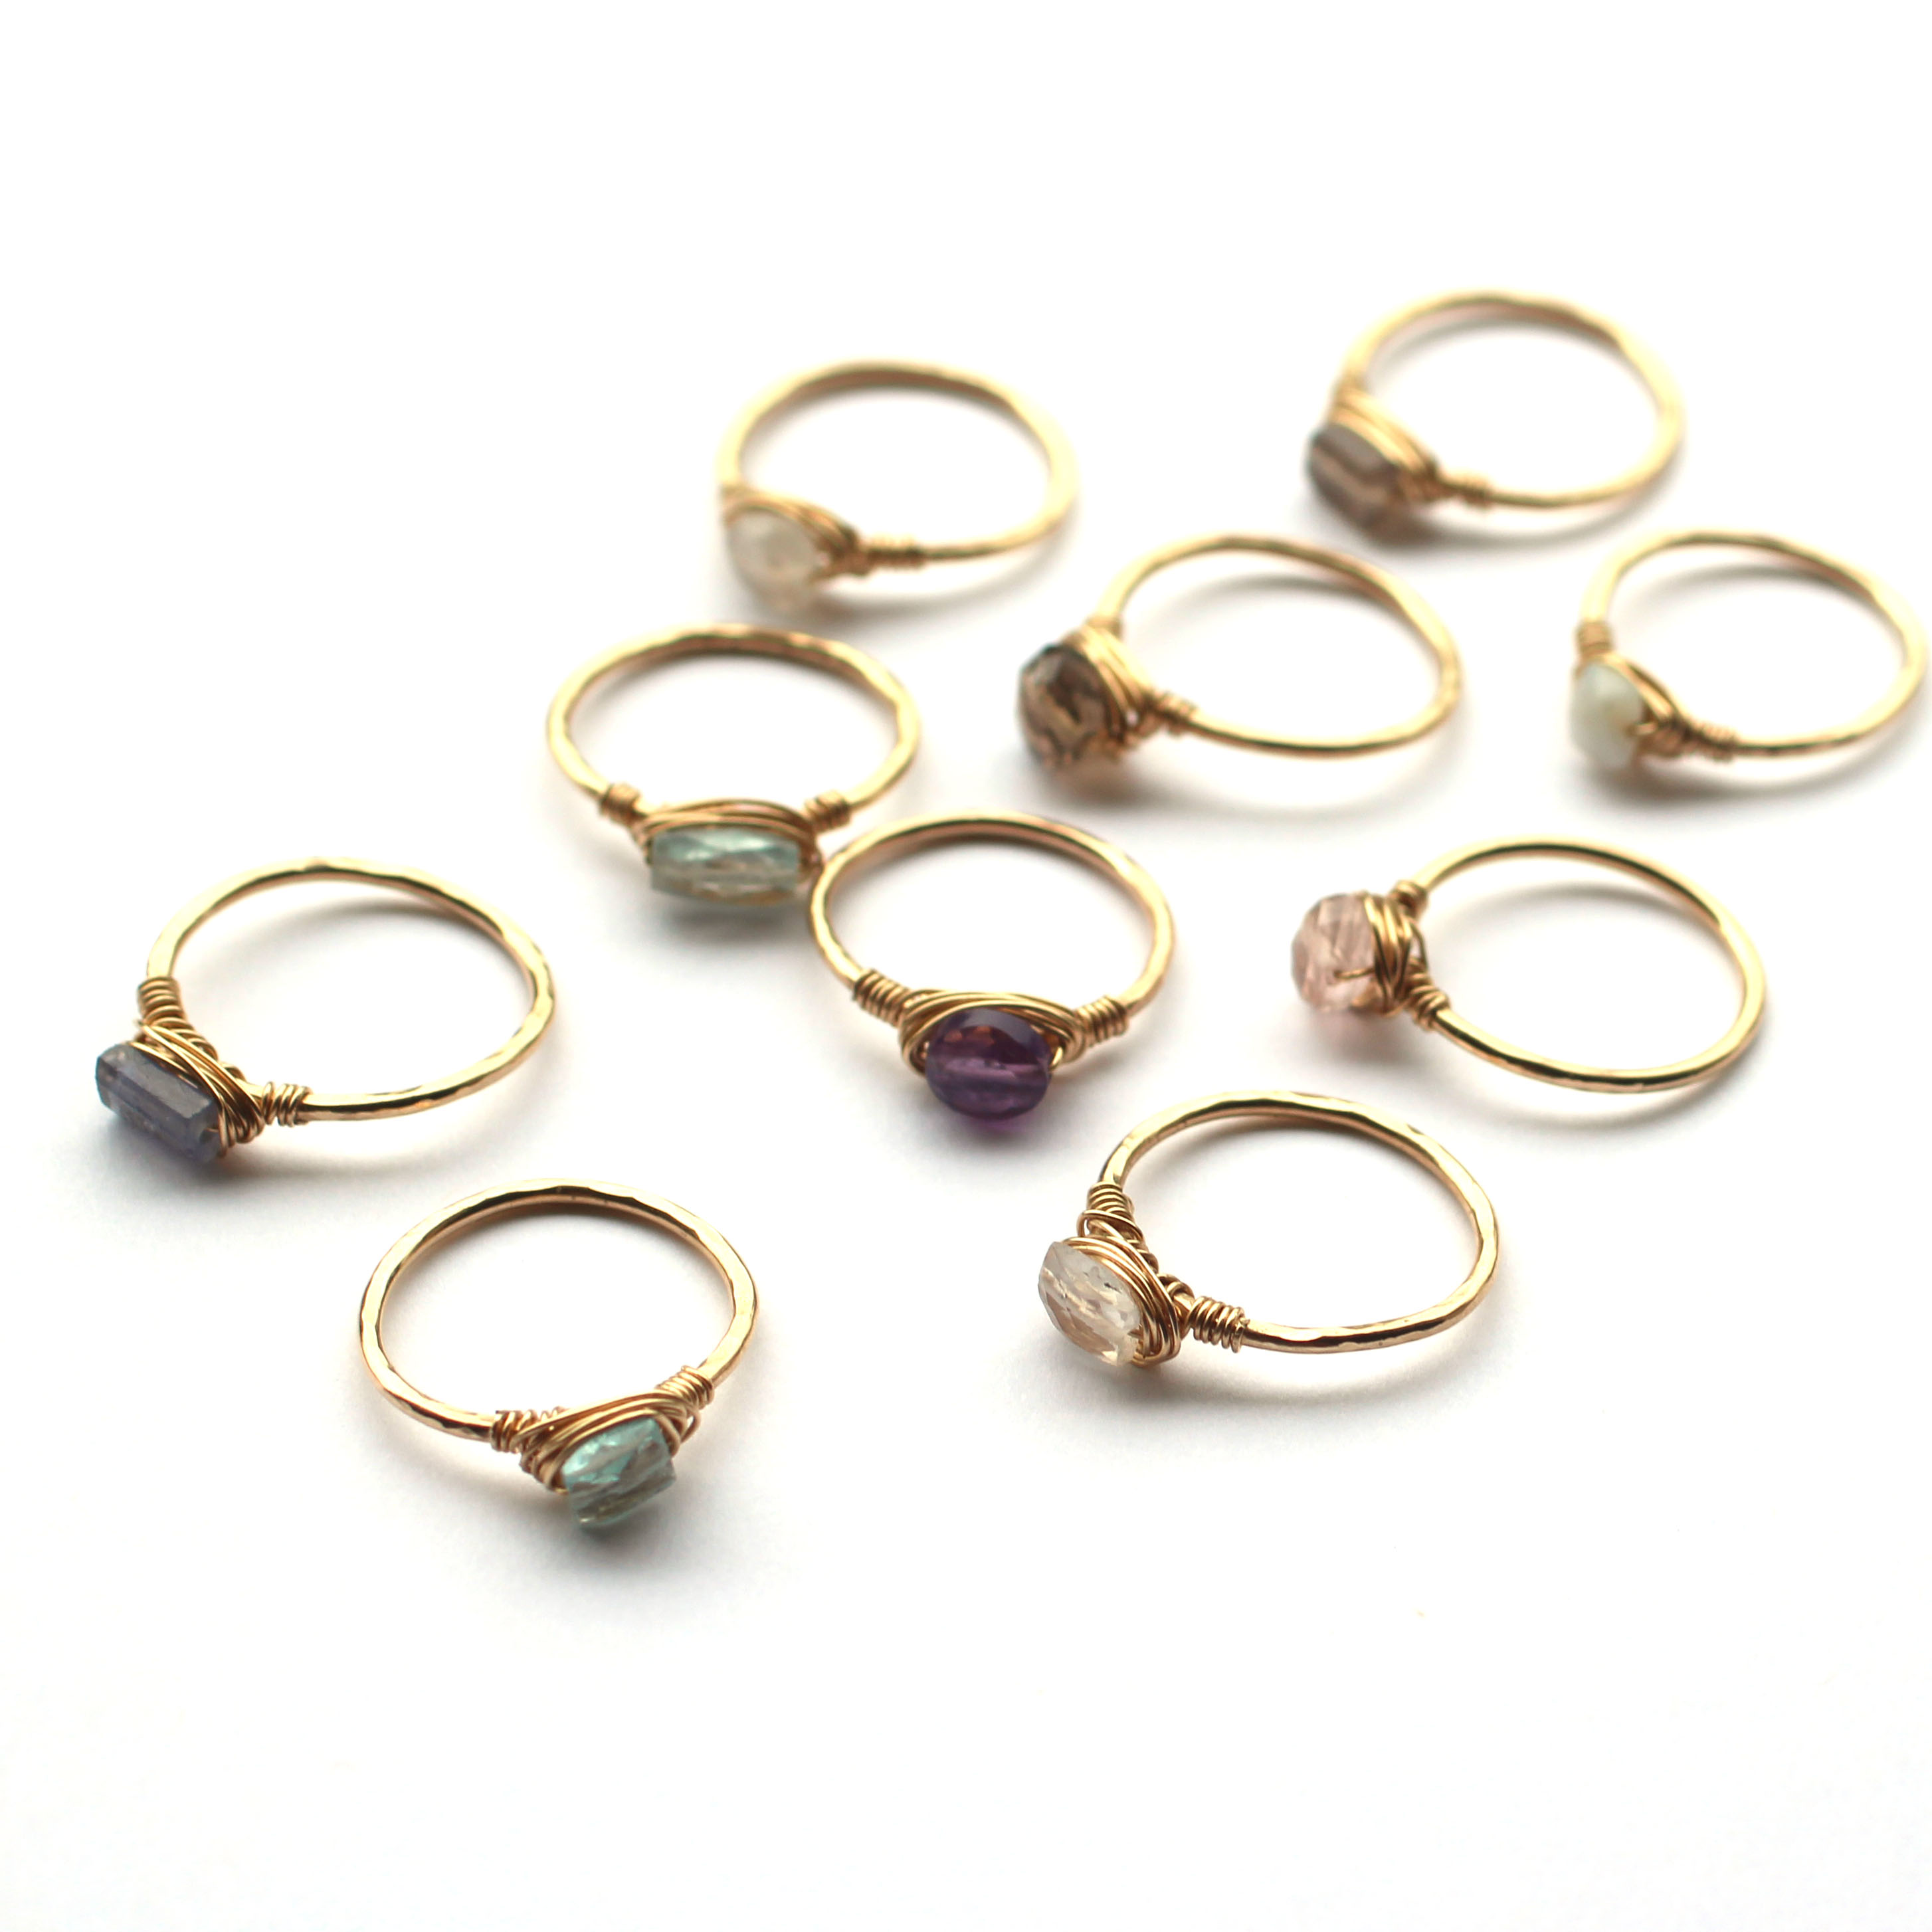 Handmade gemstone rings